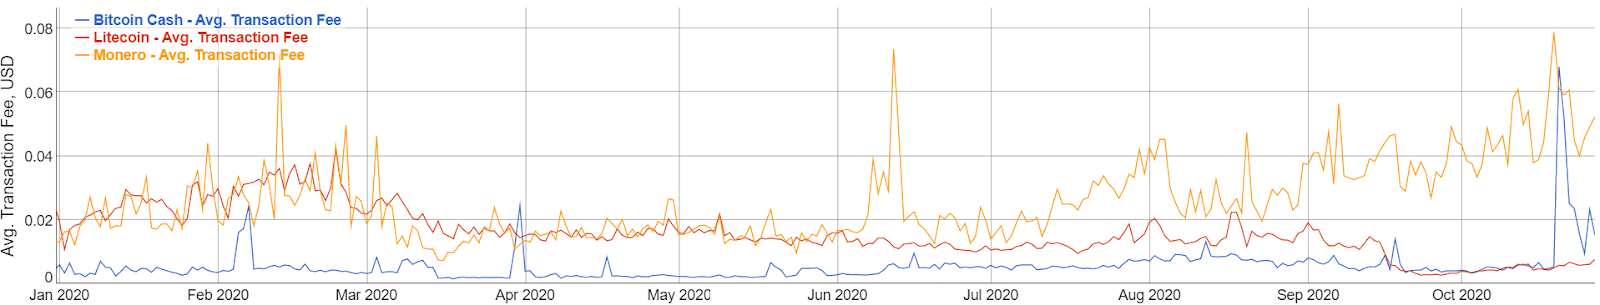 Monero (yellow) vs Bitcoin Cash (blue) vs Litecoin (red) avg. fee.